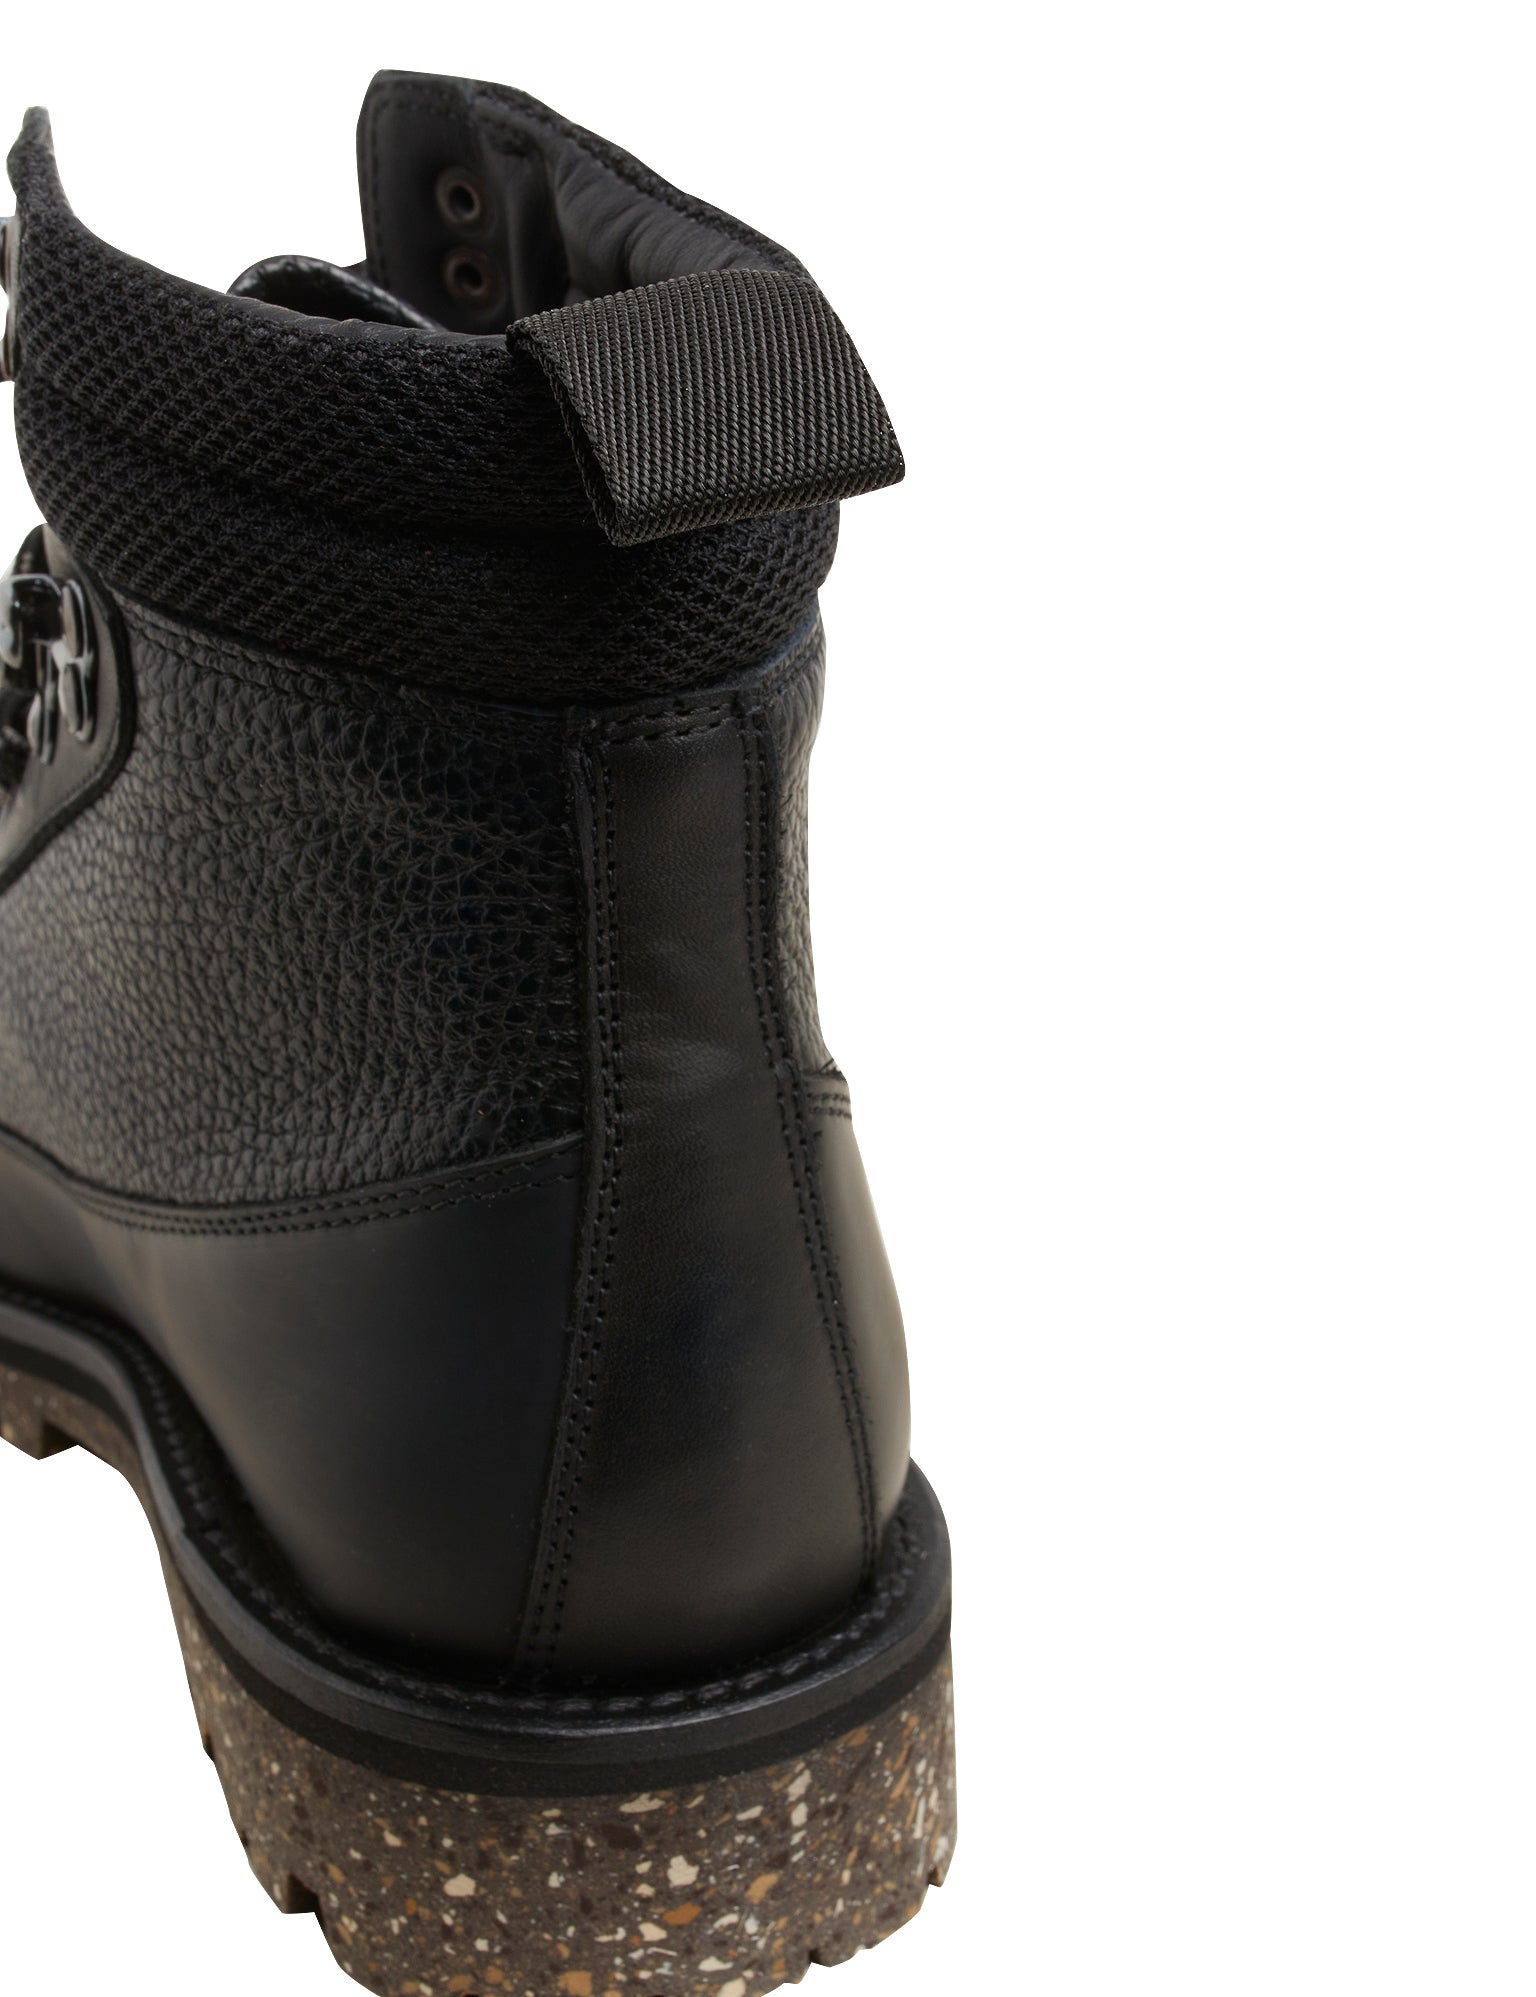 Mens leather ankle boots black poisson leather - 4D10MH - Cuadra Shop